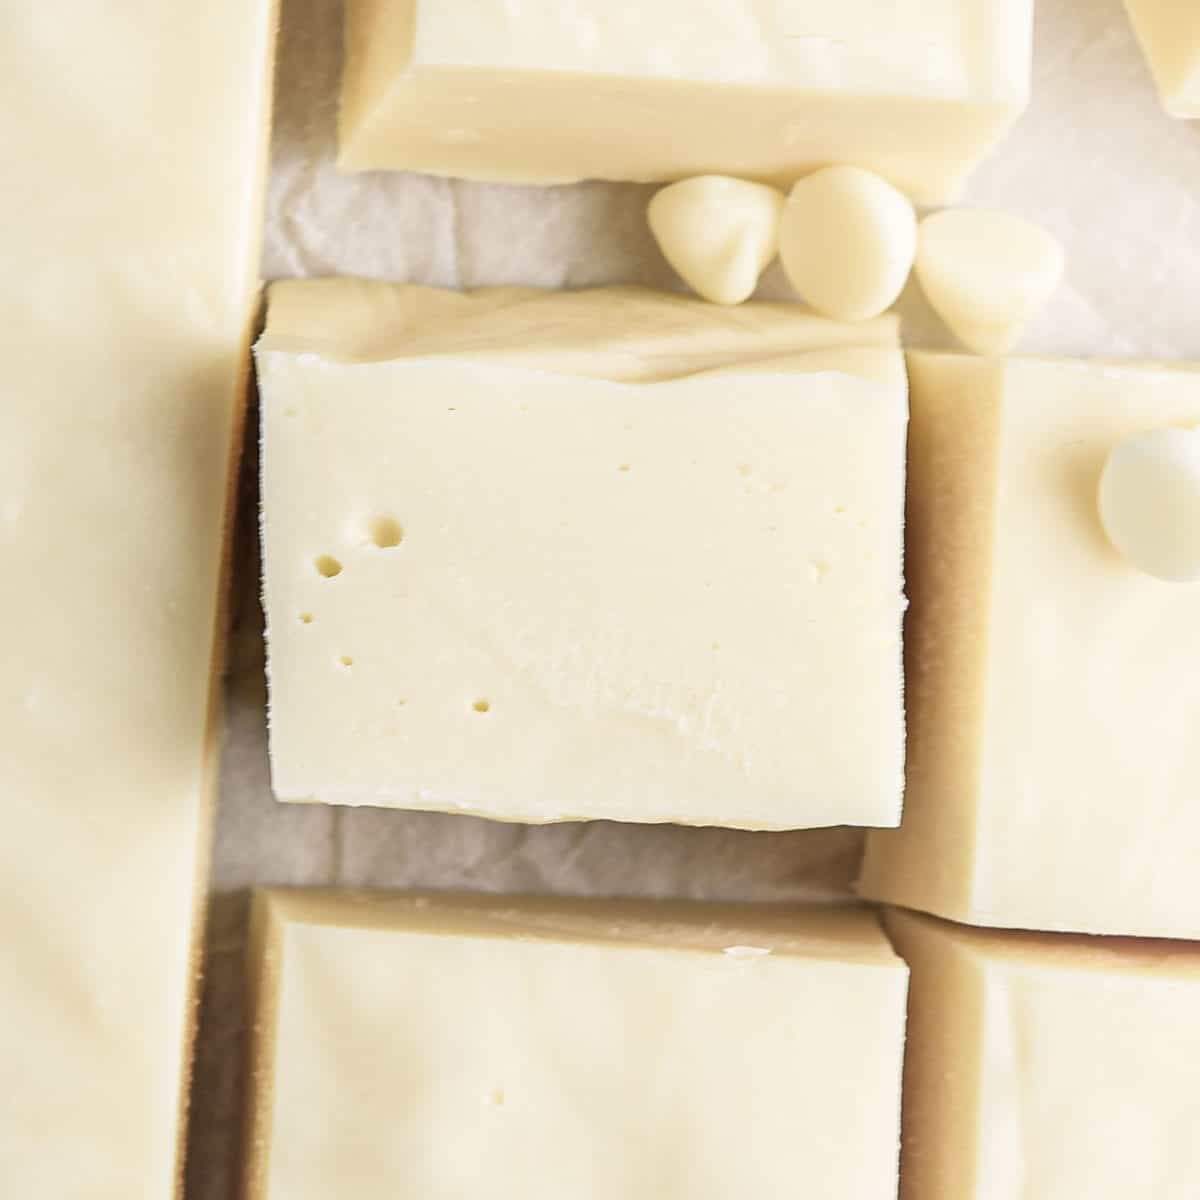 An overhead shot of white chocolate fudge cut into square blocks.